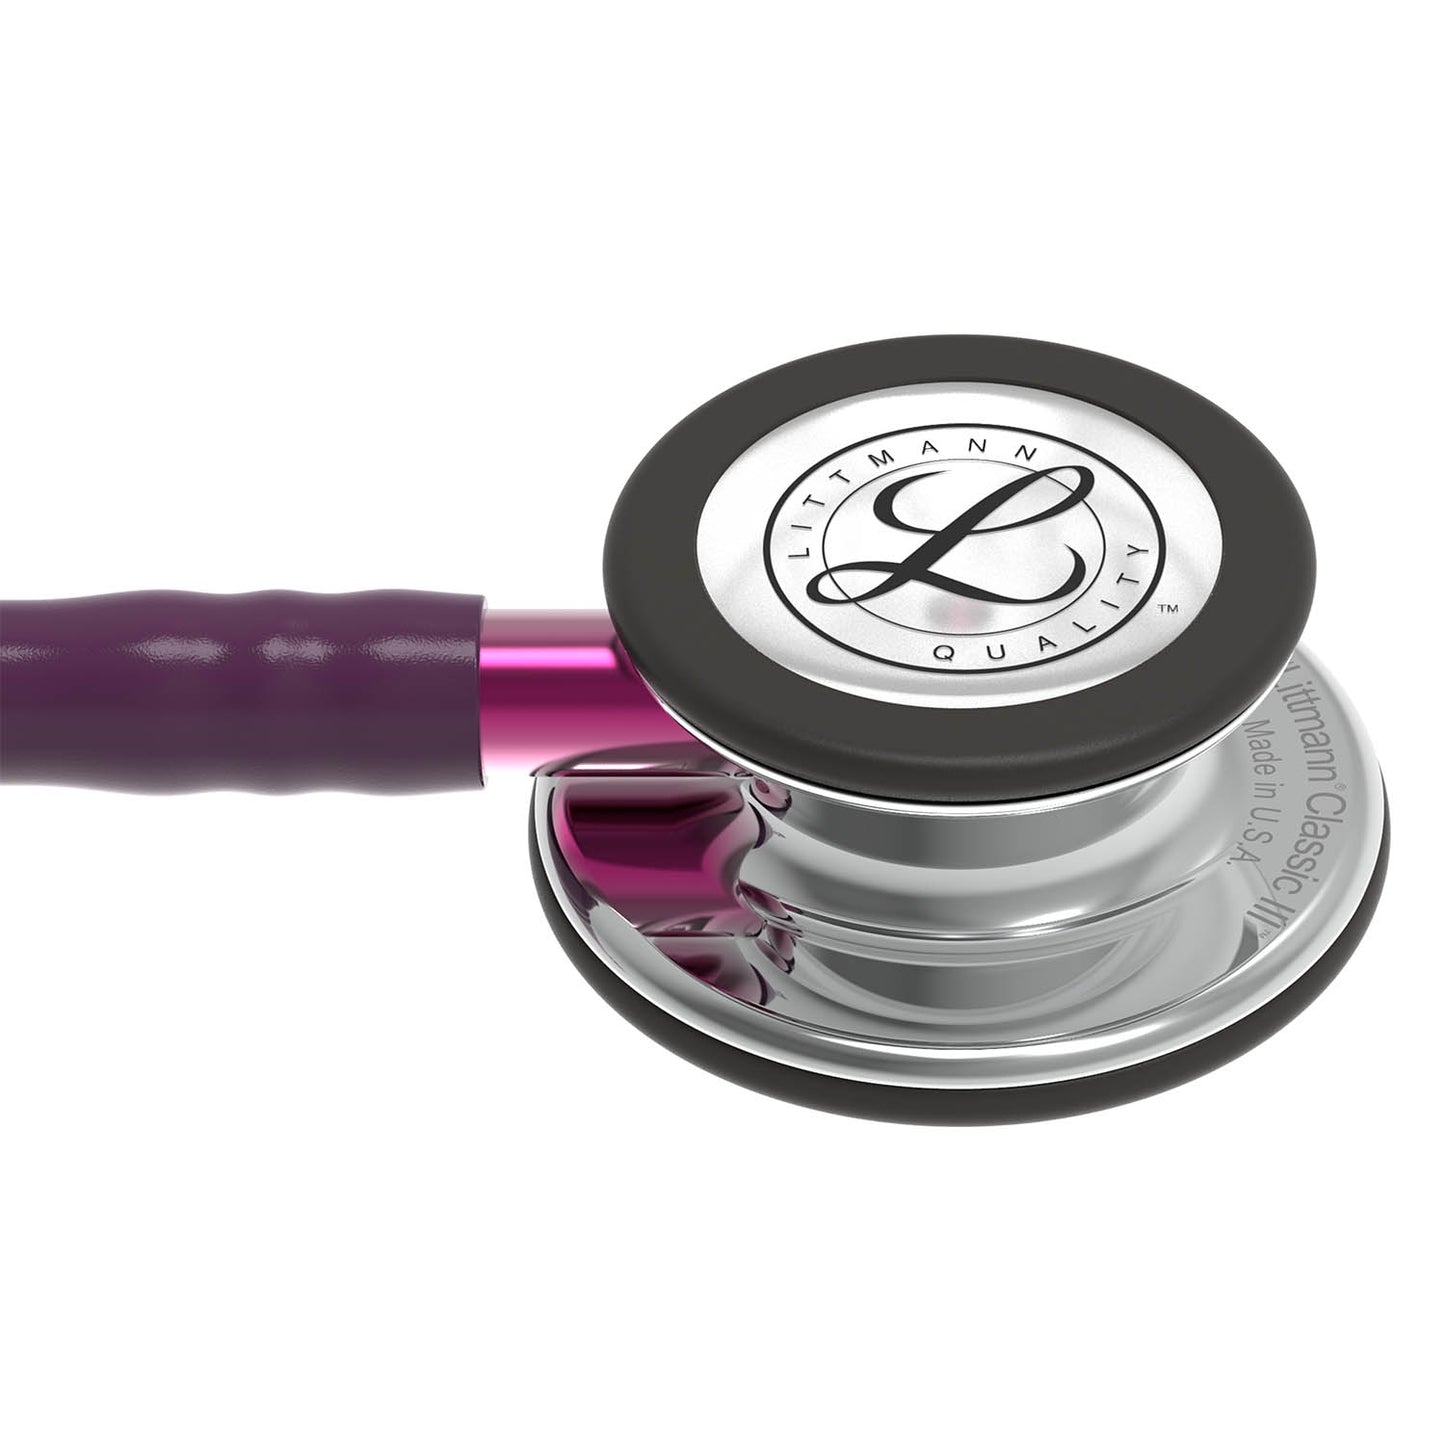 Littmann Classic III Monitoring Stethoscope: Mirror & Plum - Pink Stem 5960 3M Littmann